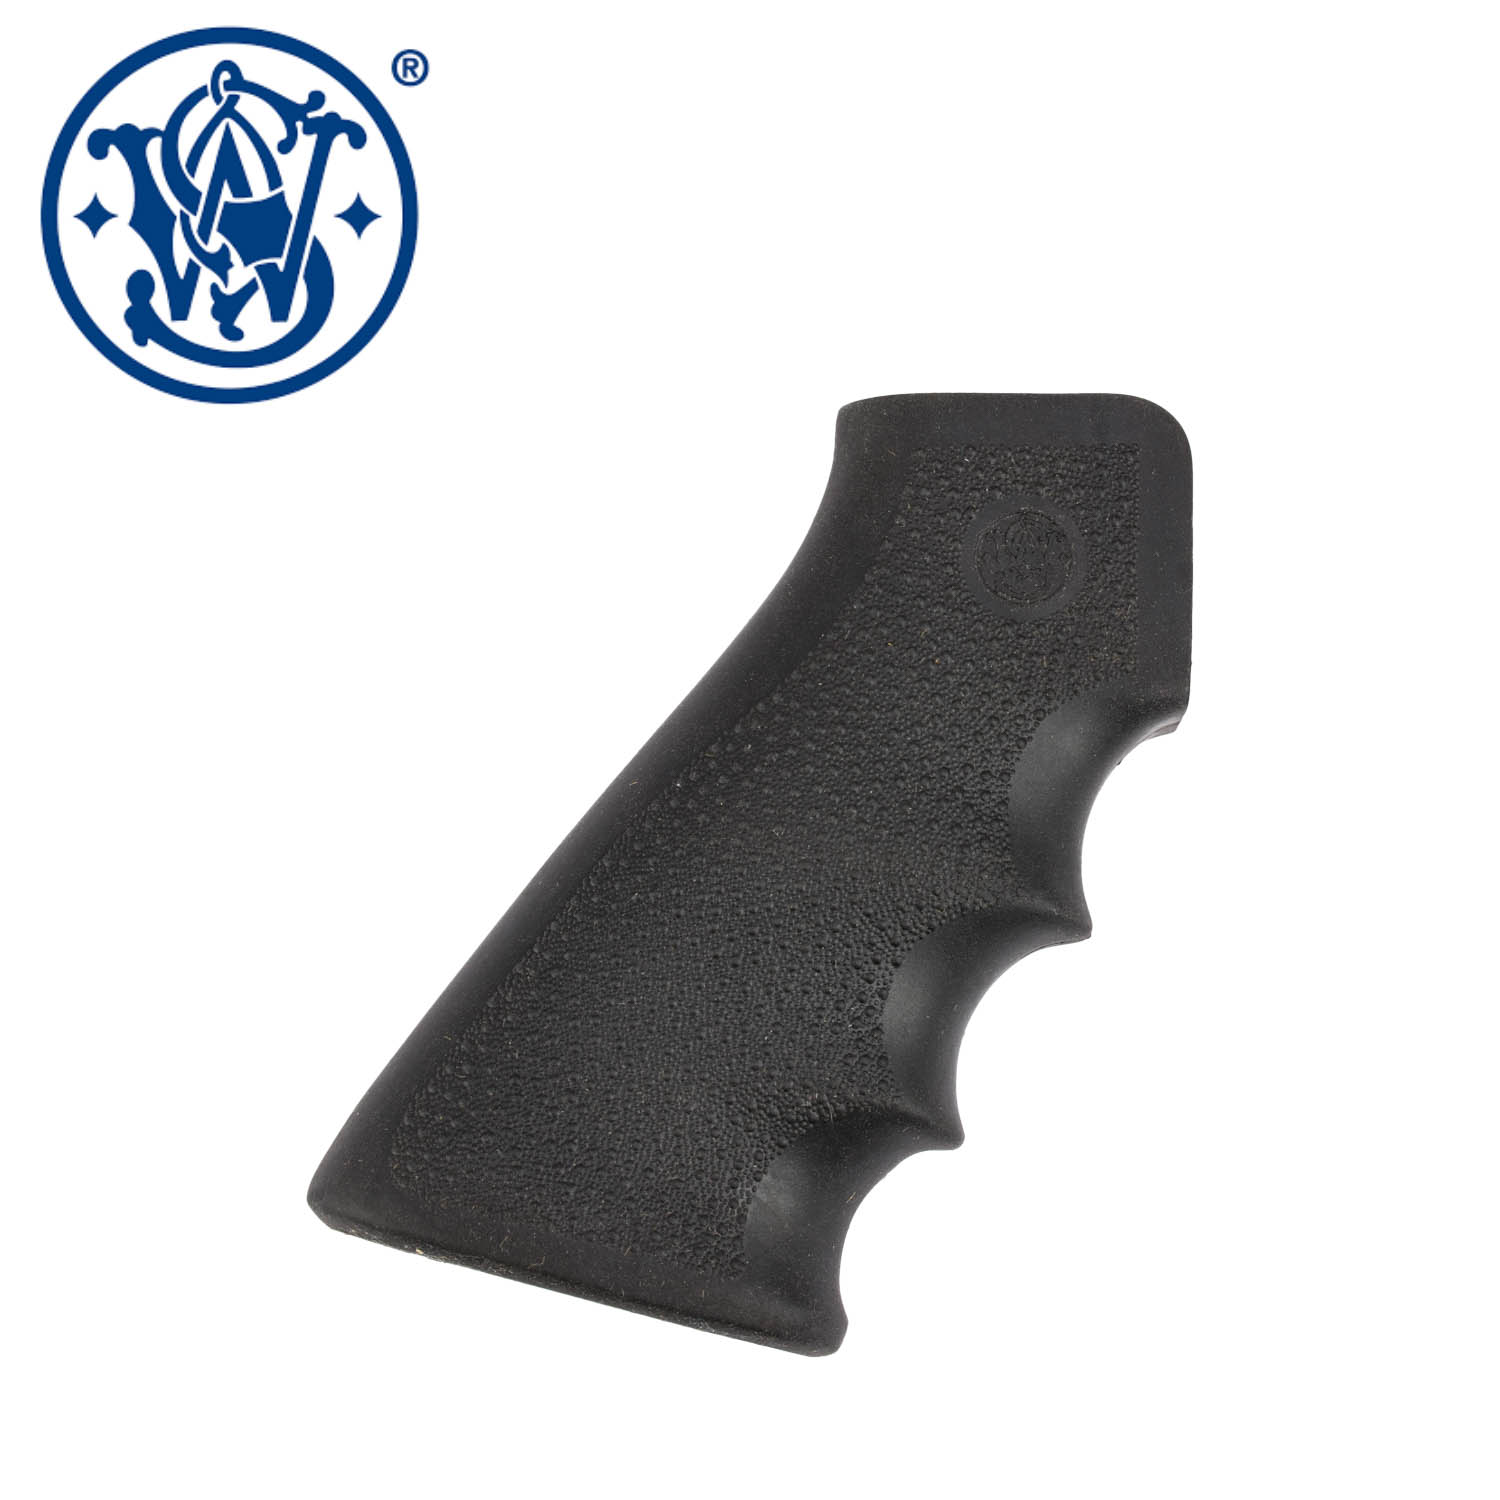 Smith & Wesson M&P15 Pistol Grip S&W Logo, Black: MGW